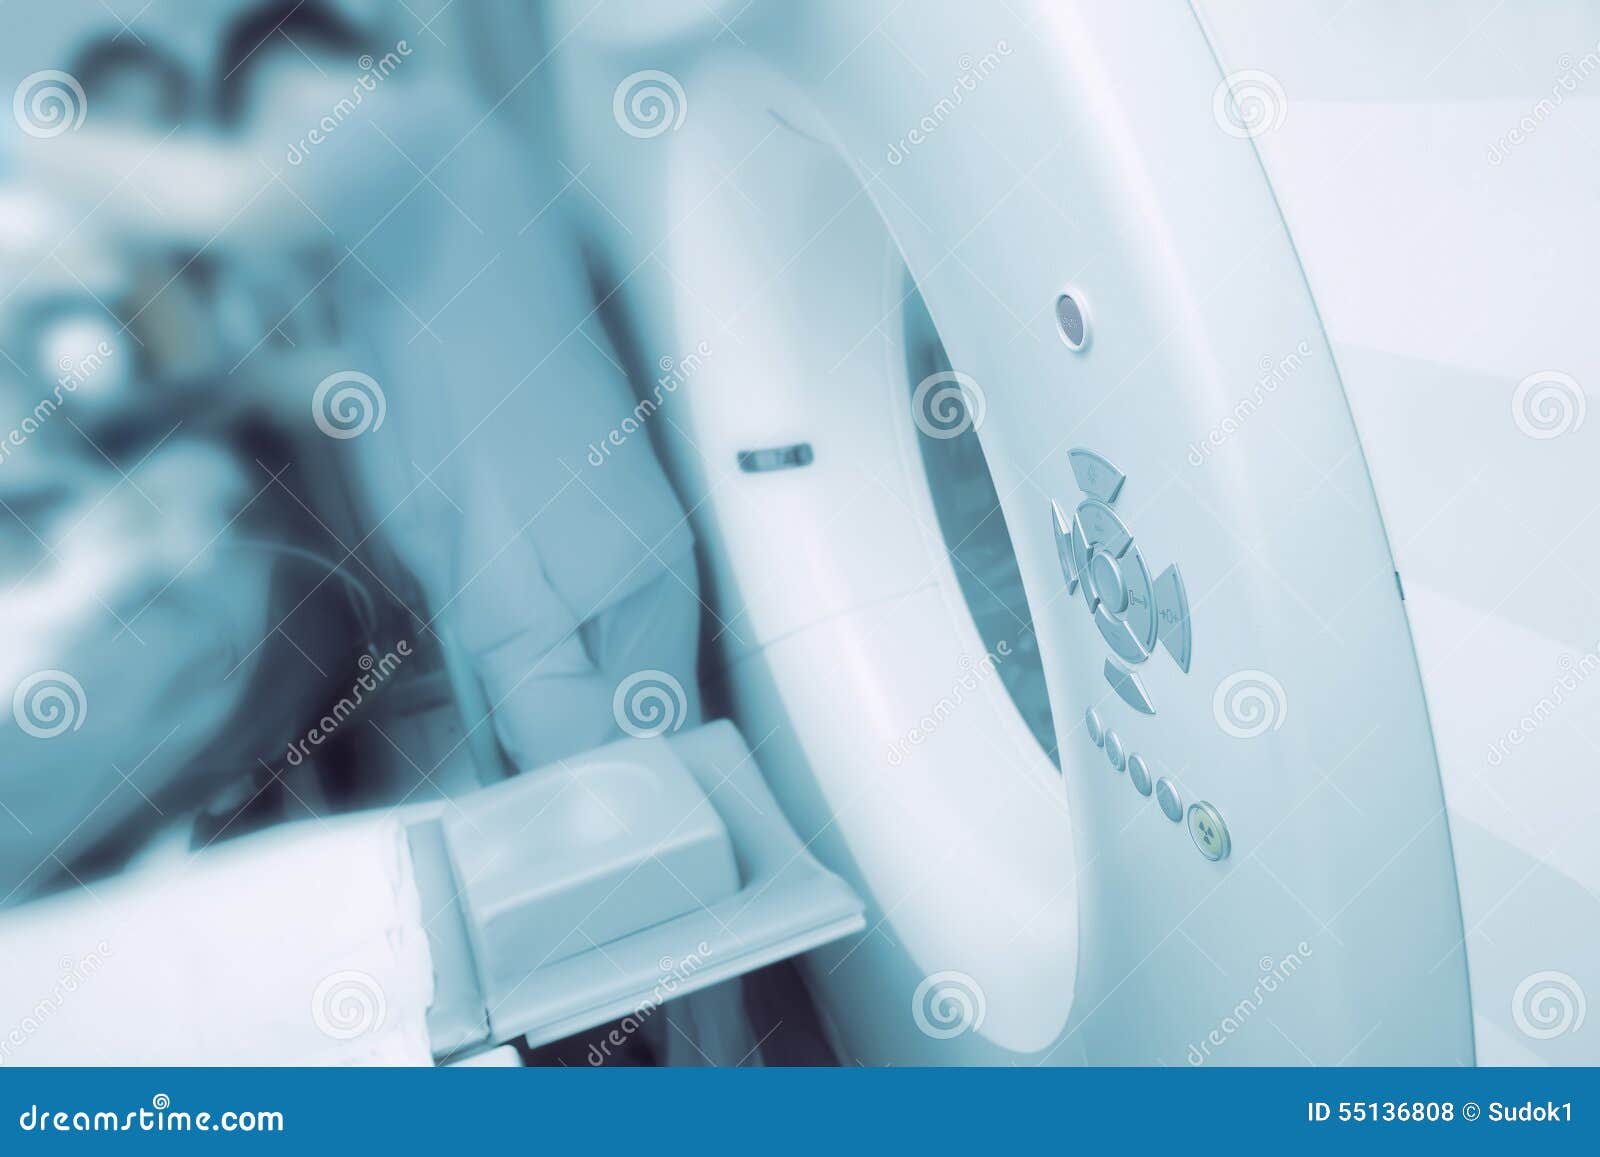 medical examination using modern ct scanner